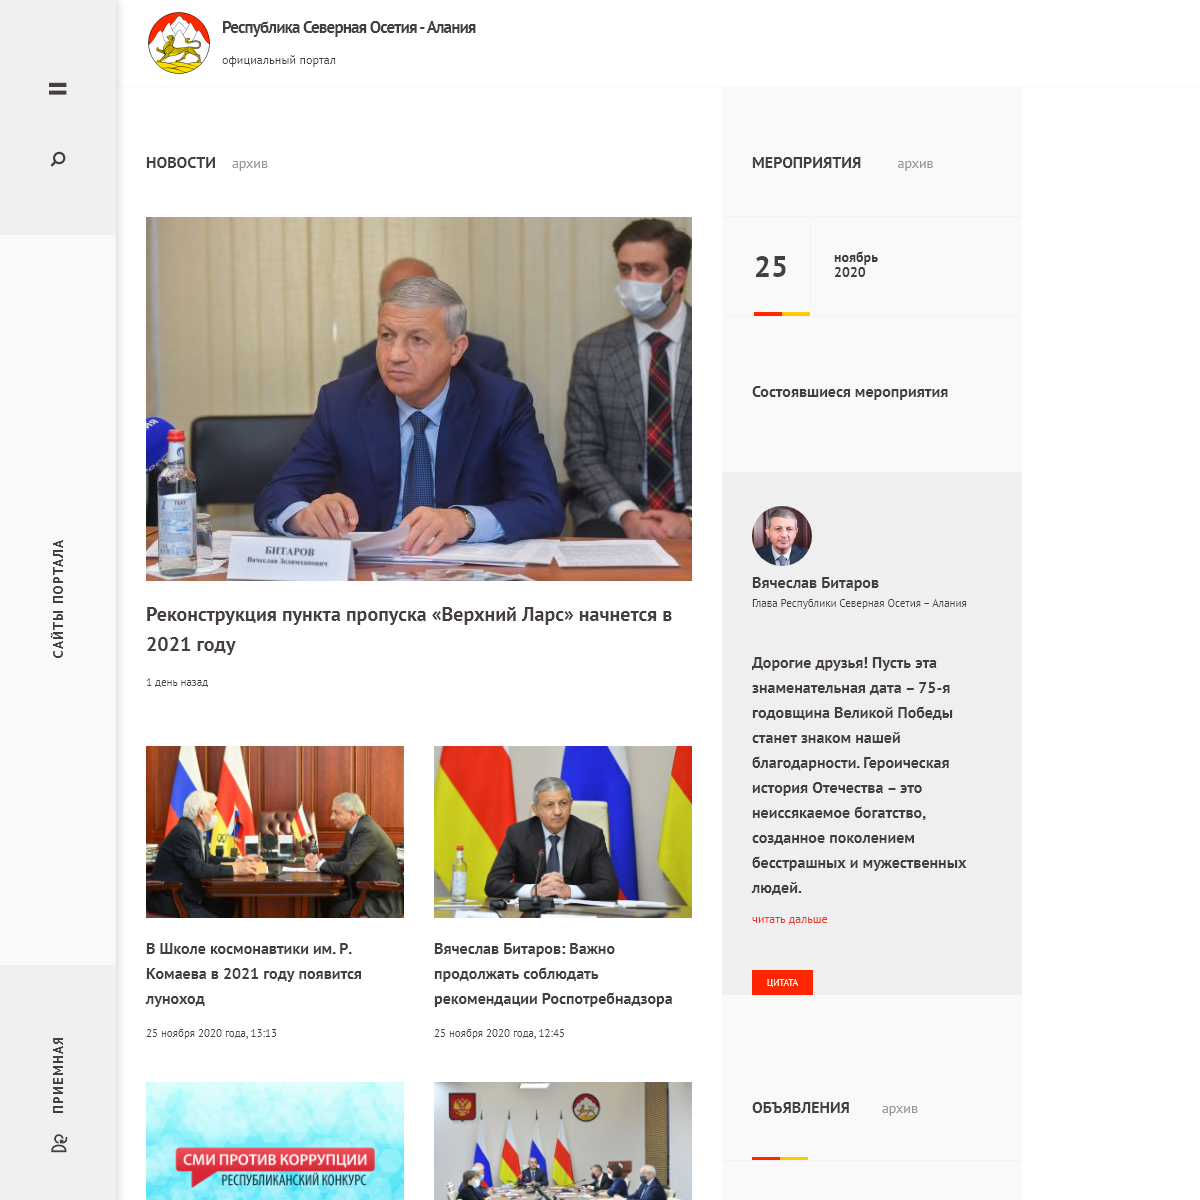 A complete backup of alania.gov.ru